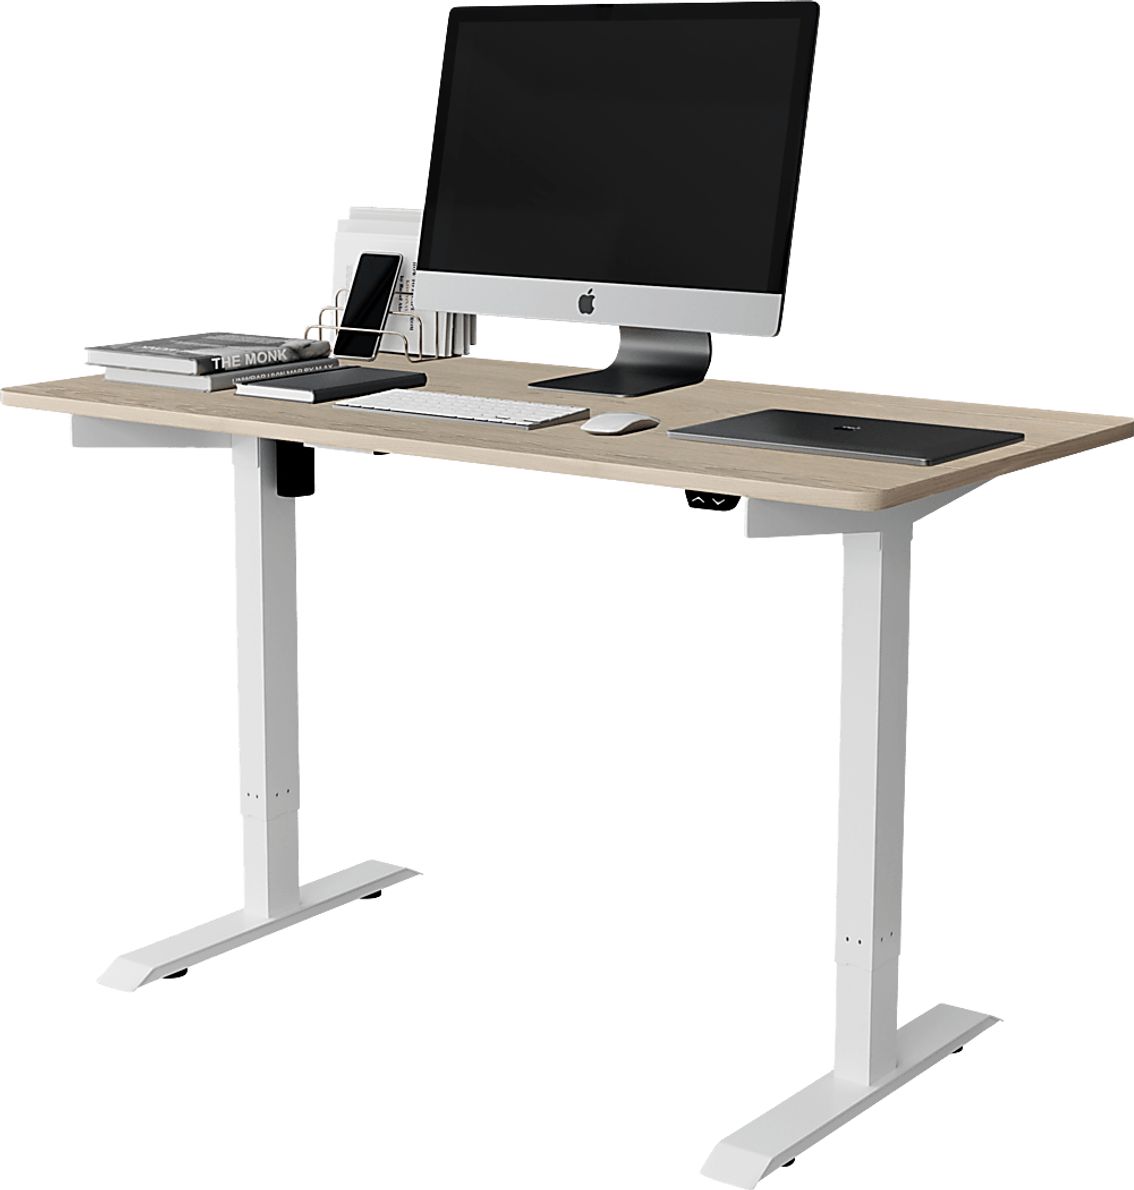 Ameslin Brown Adjustable Desk